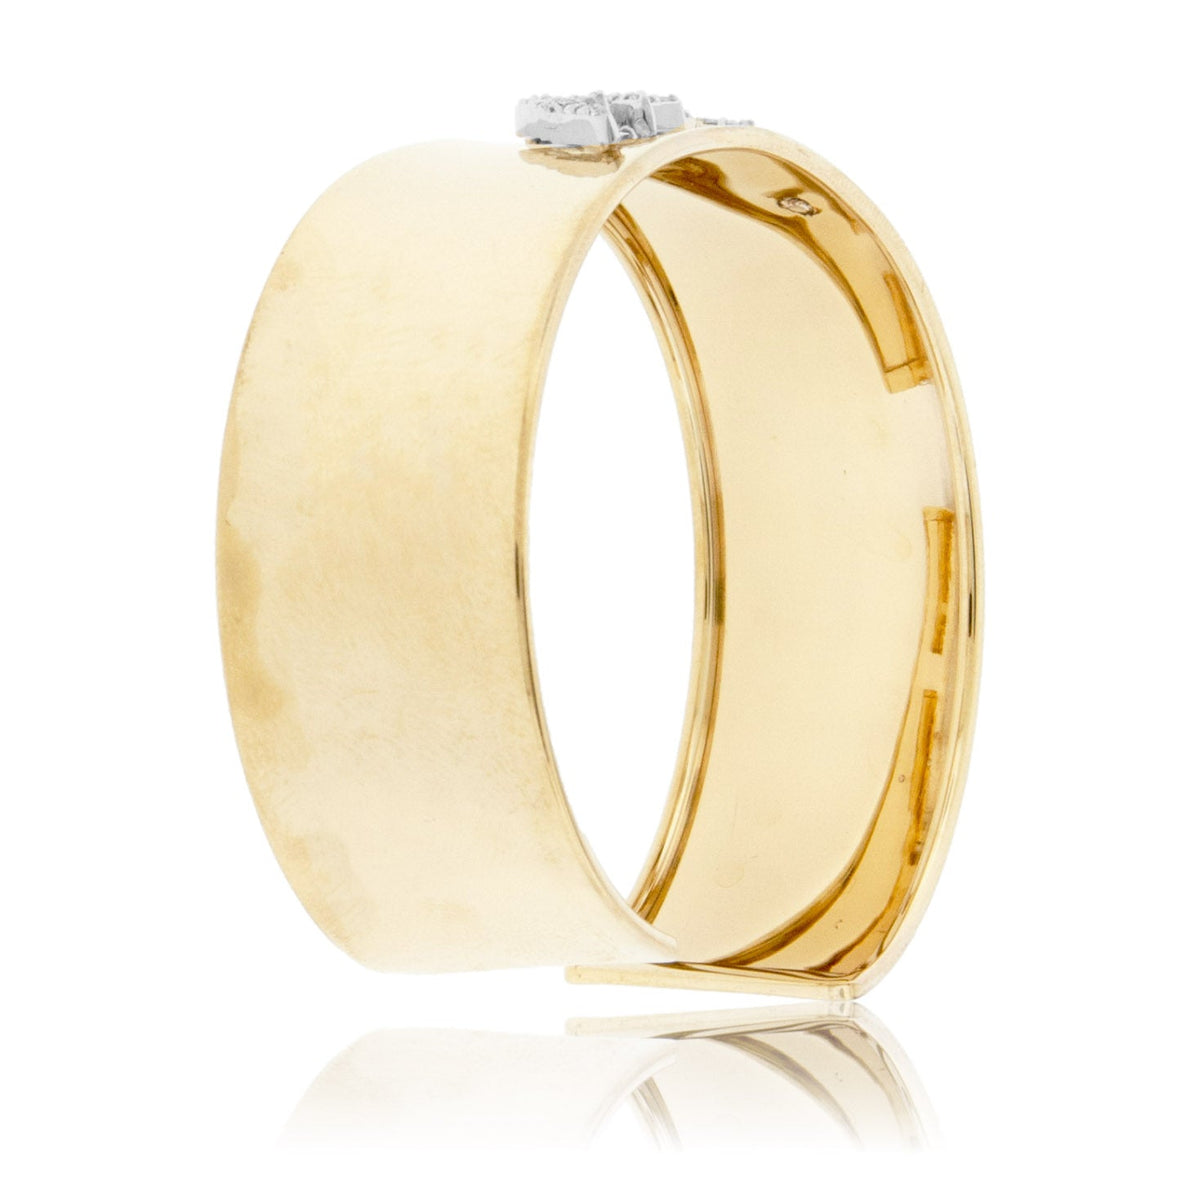 Gold Cuff Bracelet with Diamond Mountain Silhouette - Park City Jewelers